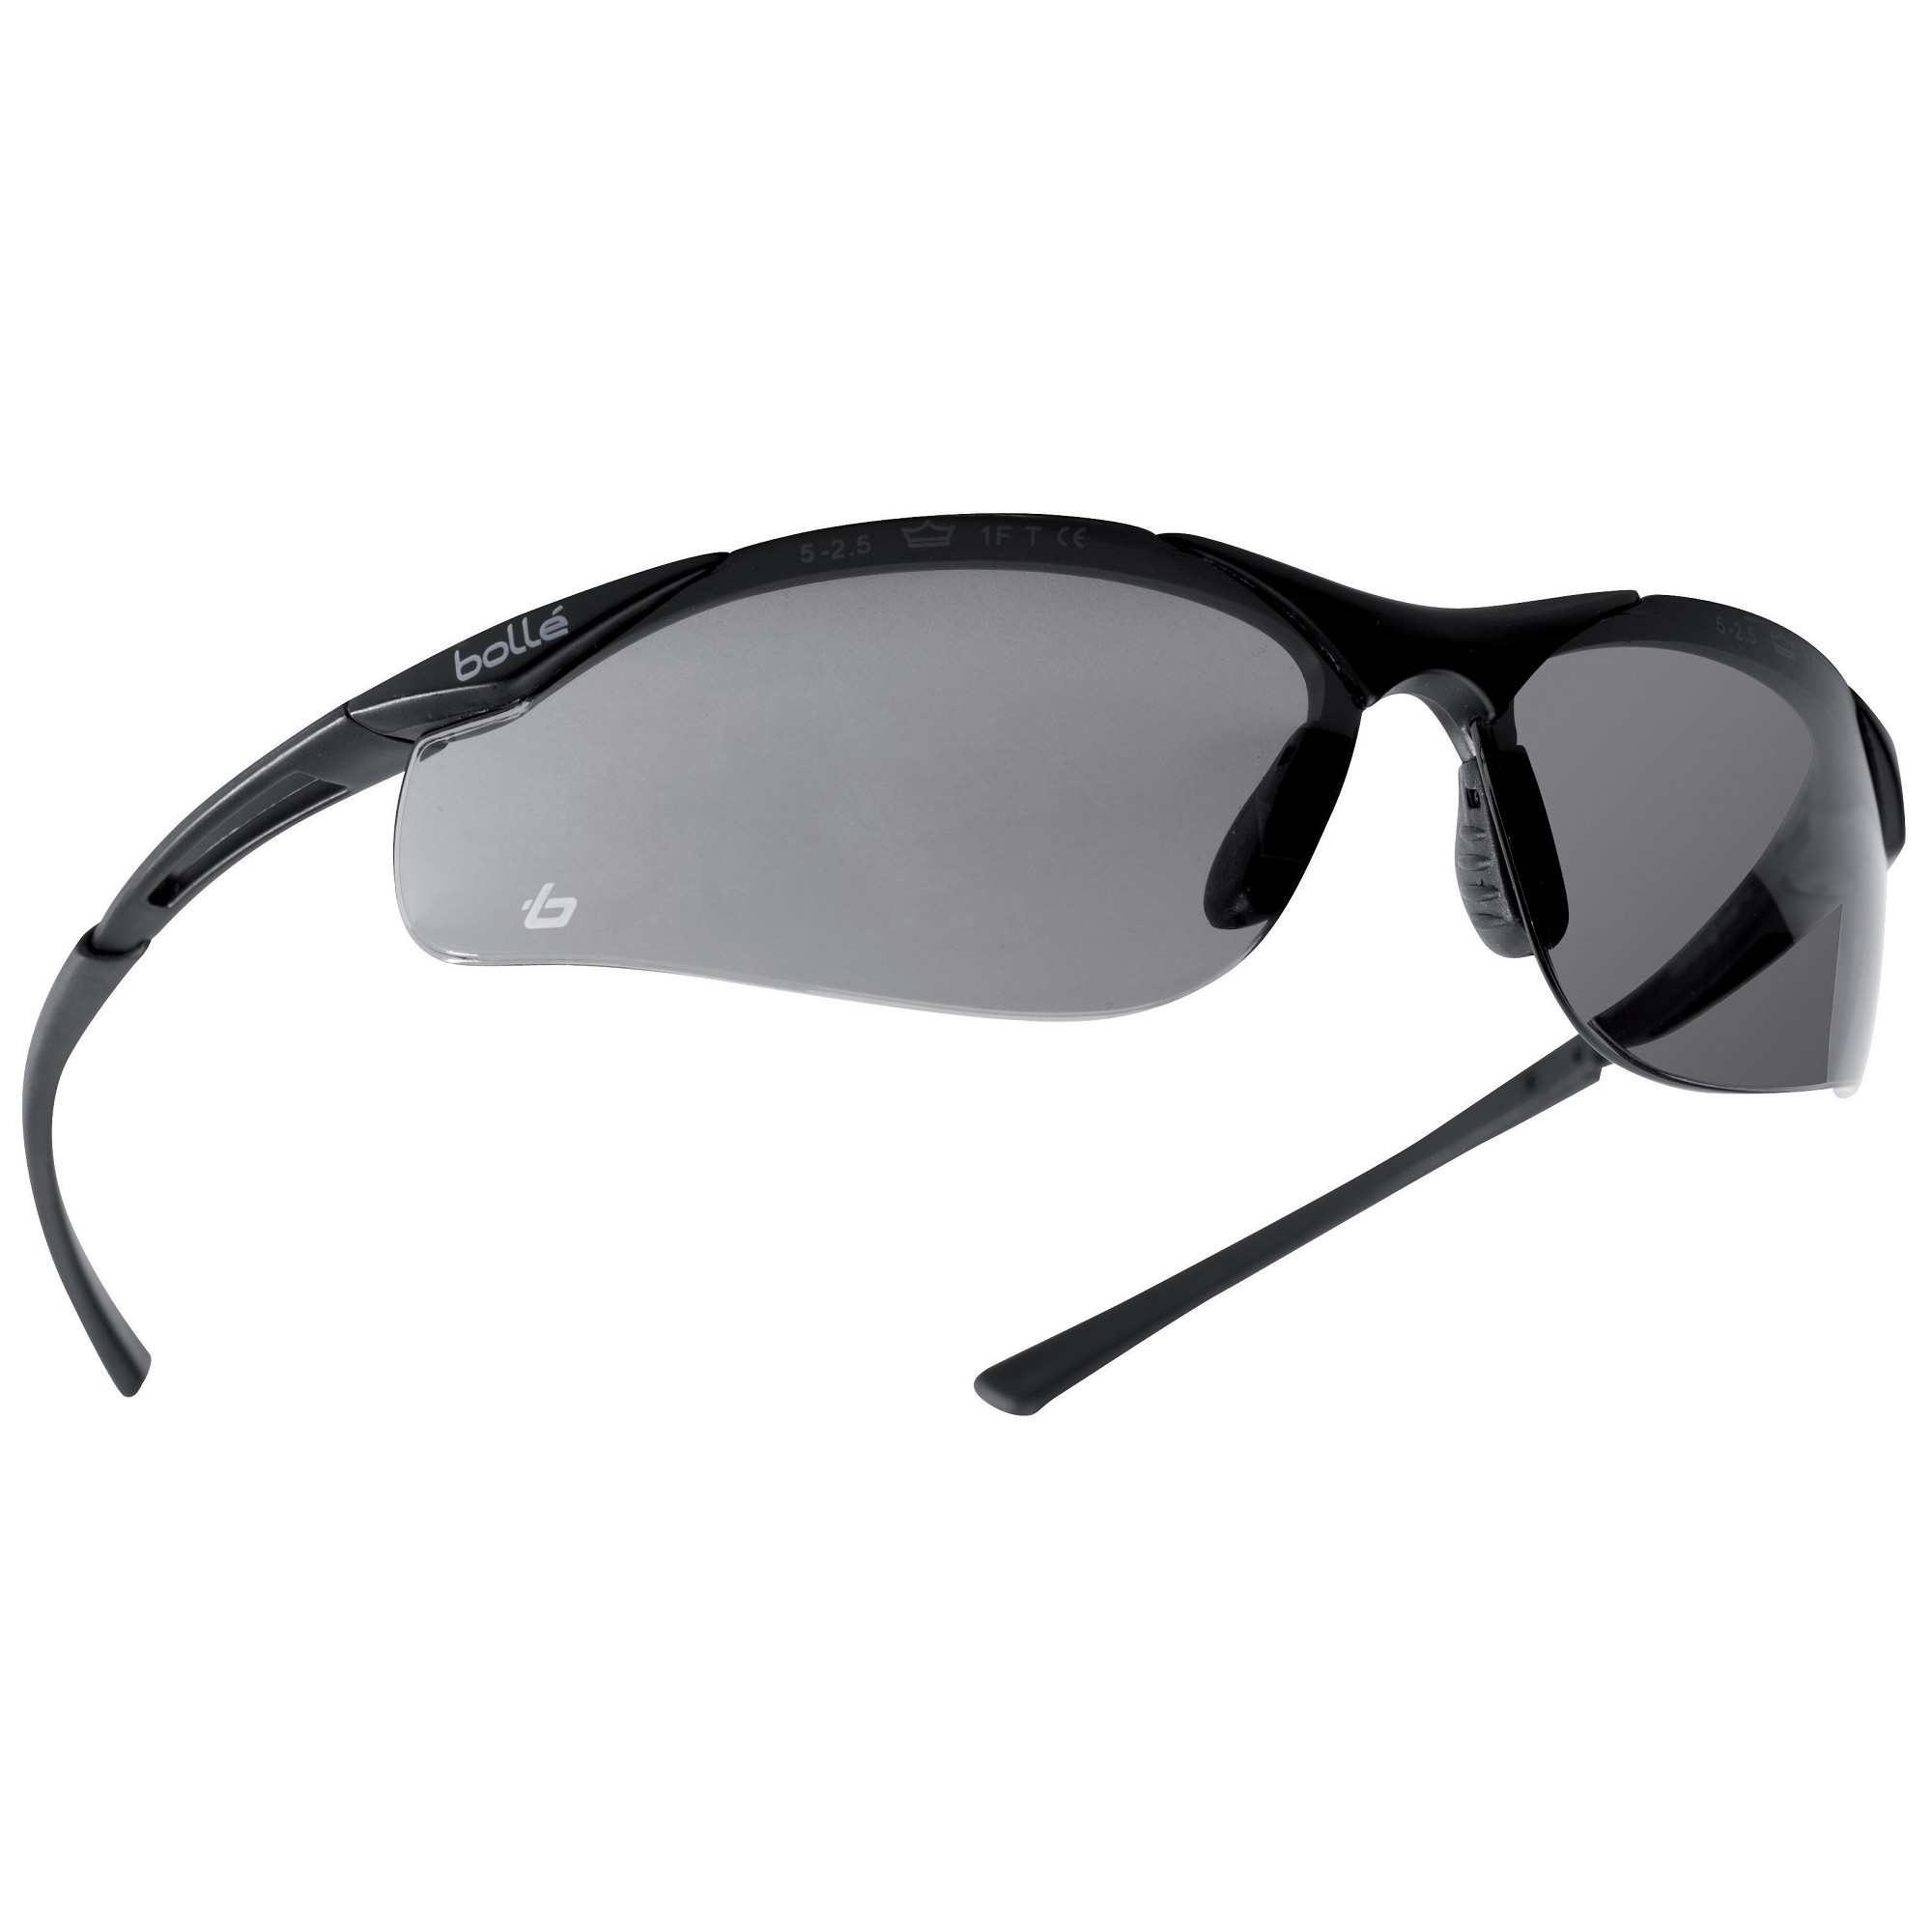 BOLLE CONTOUR Safety Glasses Clear Smoke ESP Lens Anti-Fog Anti-Scratch FREE Bag 